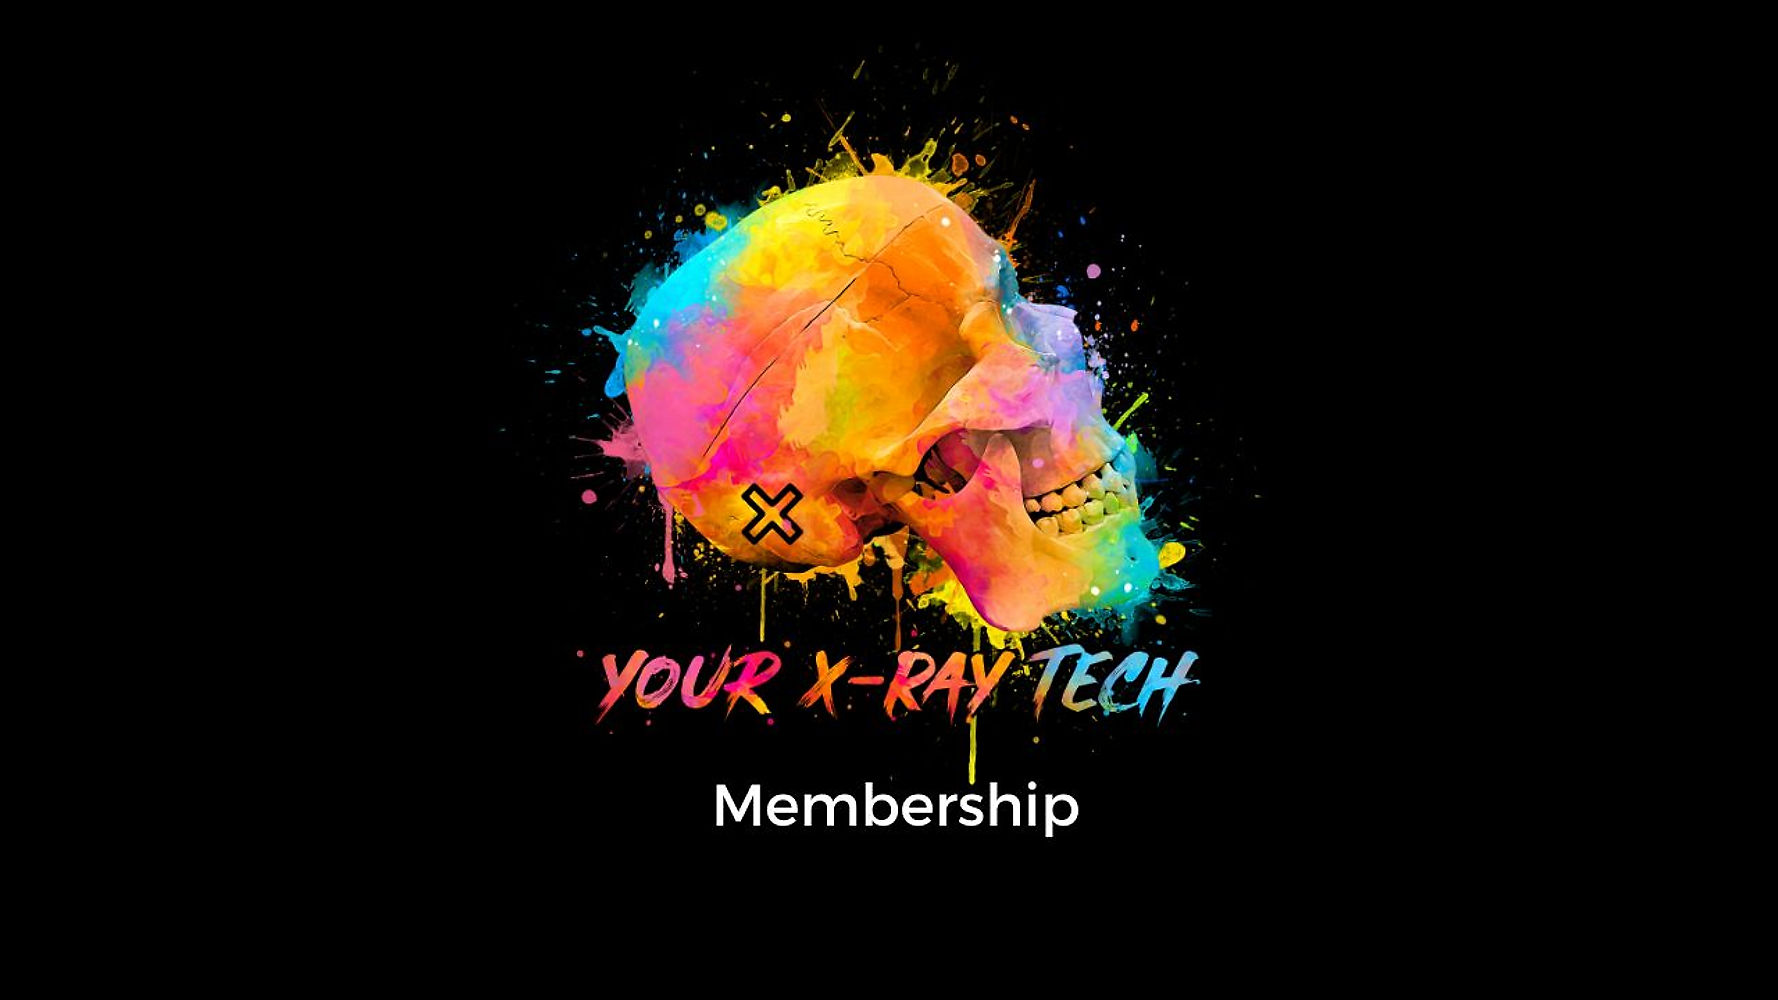 Your X-Ray Tech Membership